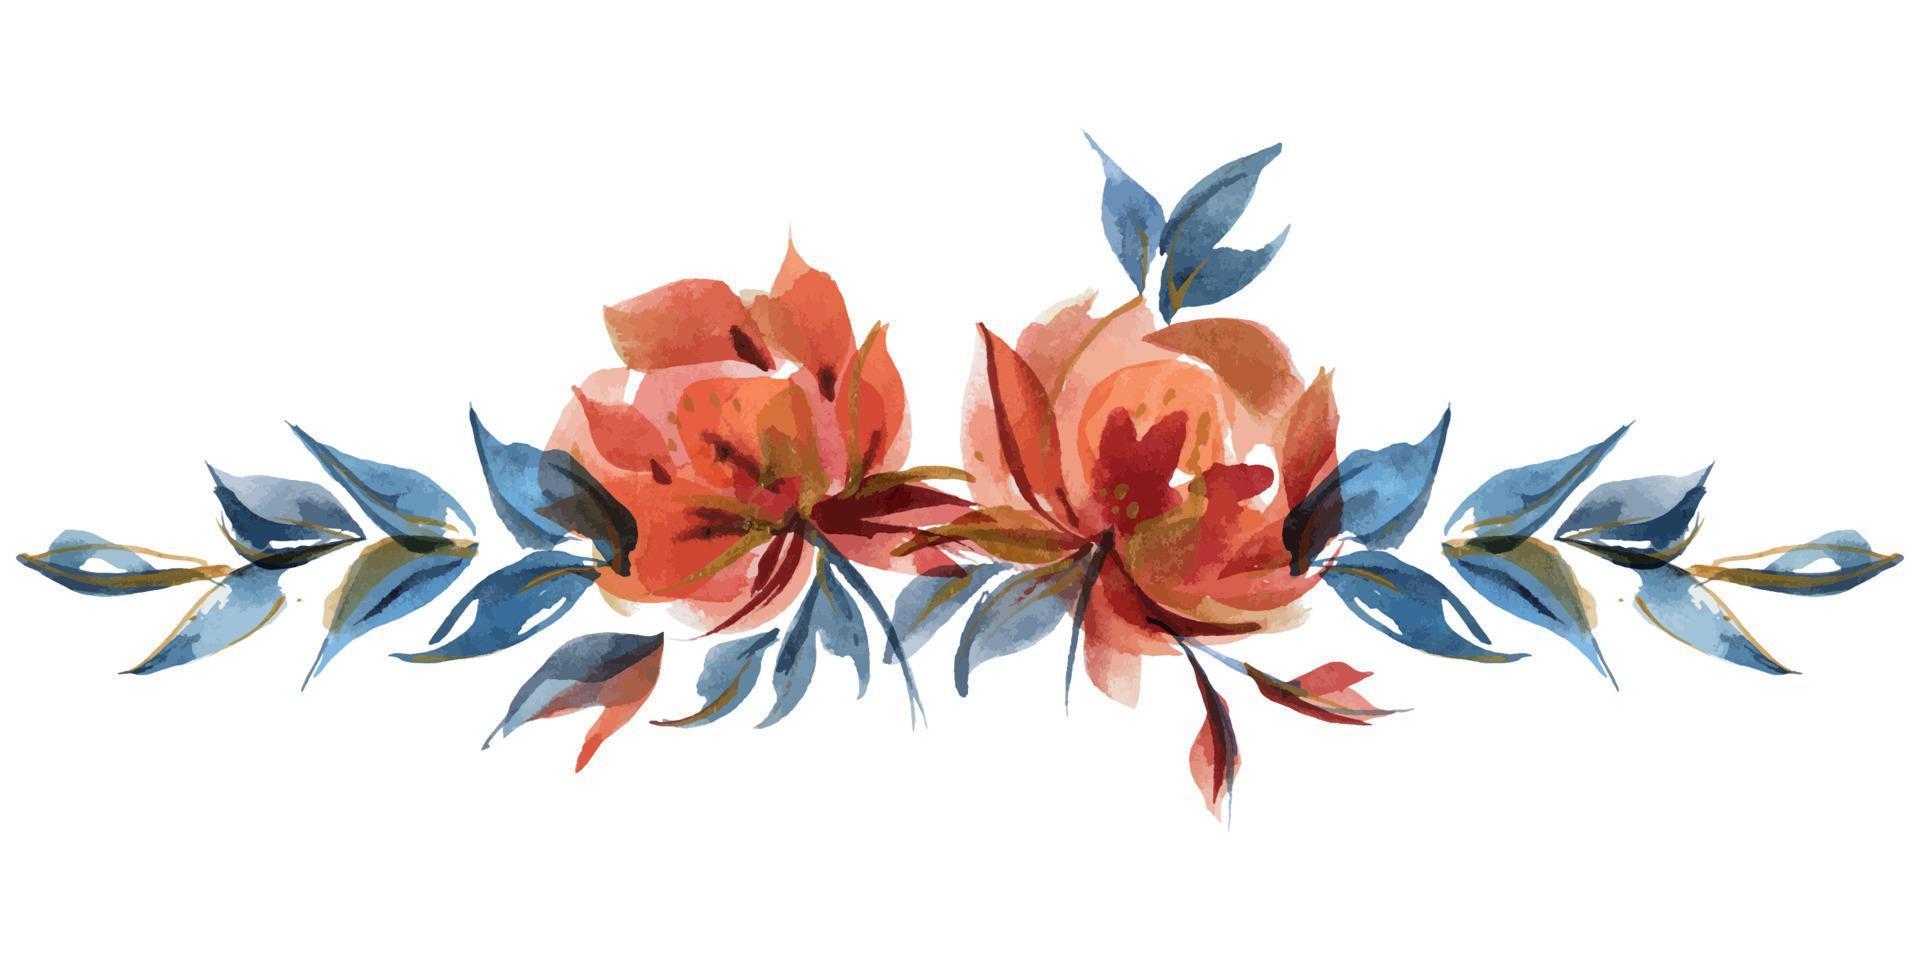 vinheta de guirlanda floral de rosas azuis e laranja na tendência folk cottege vetor